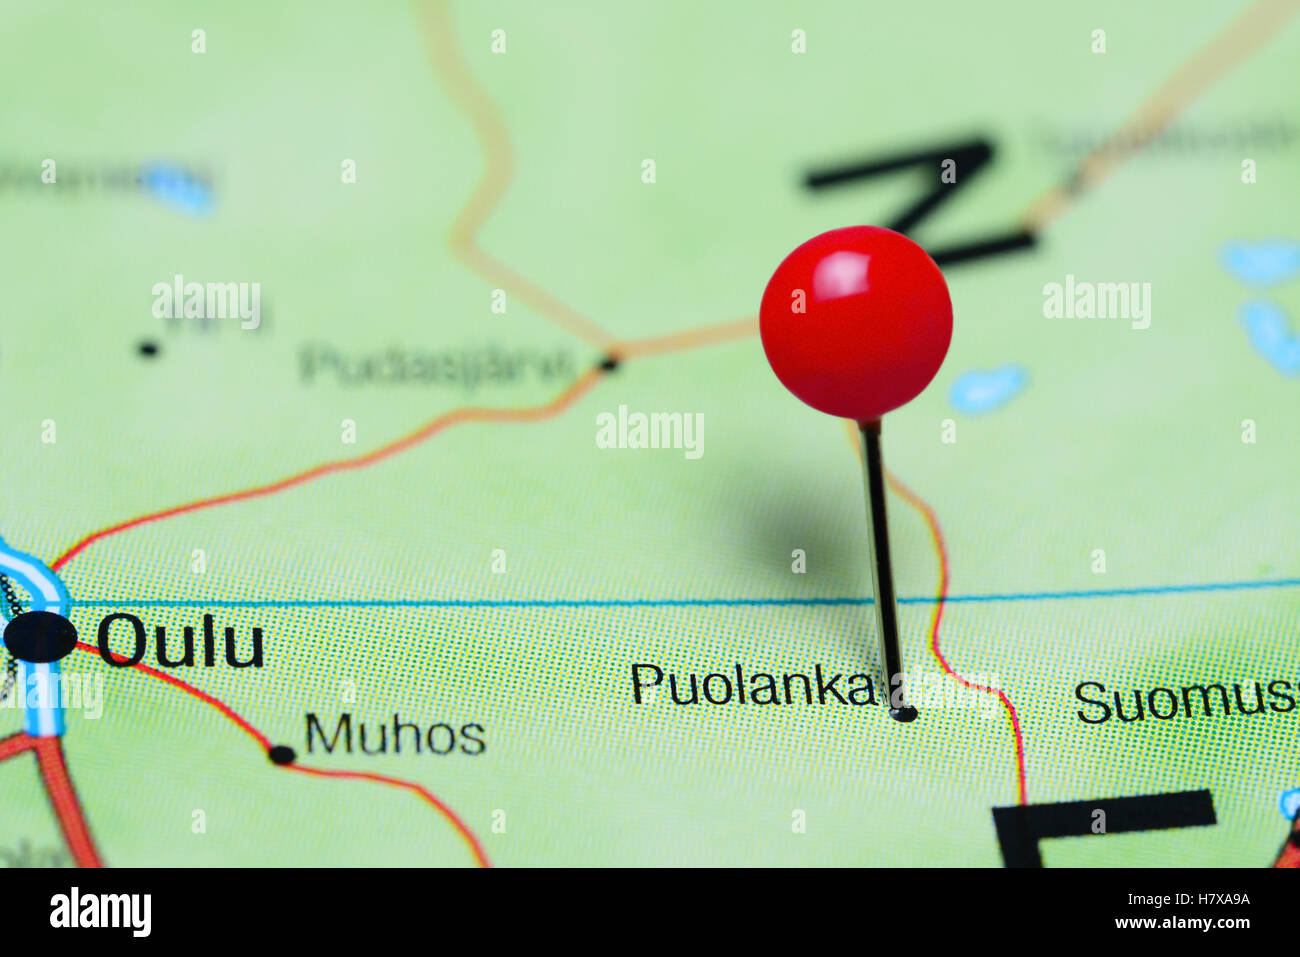 Puolanka pinned on a map of Finland Stock Photo